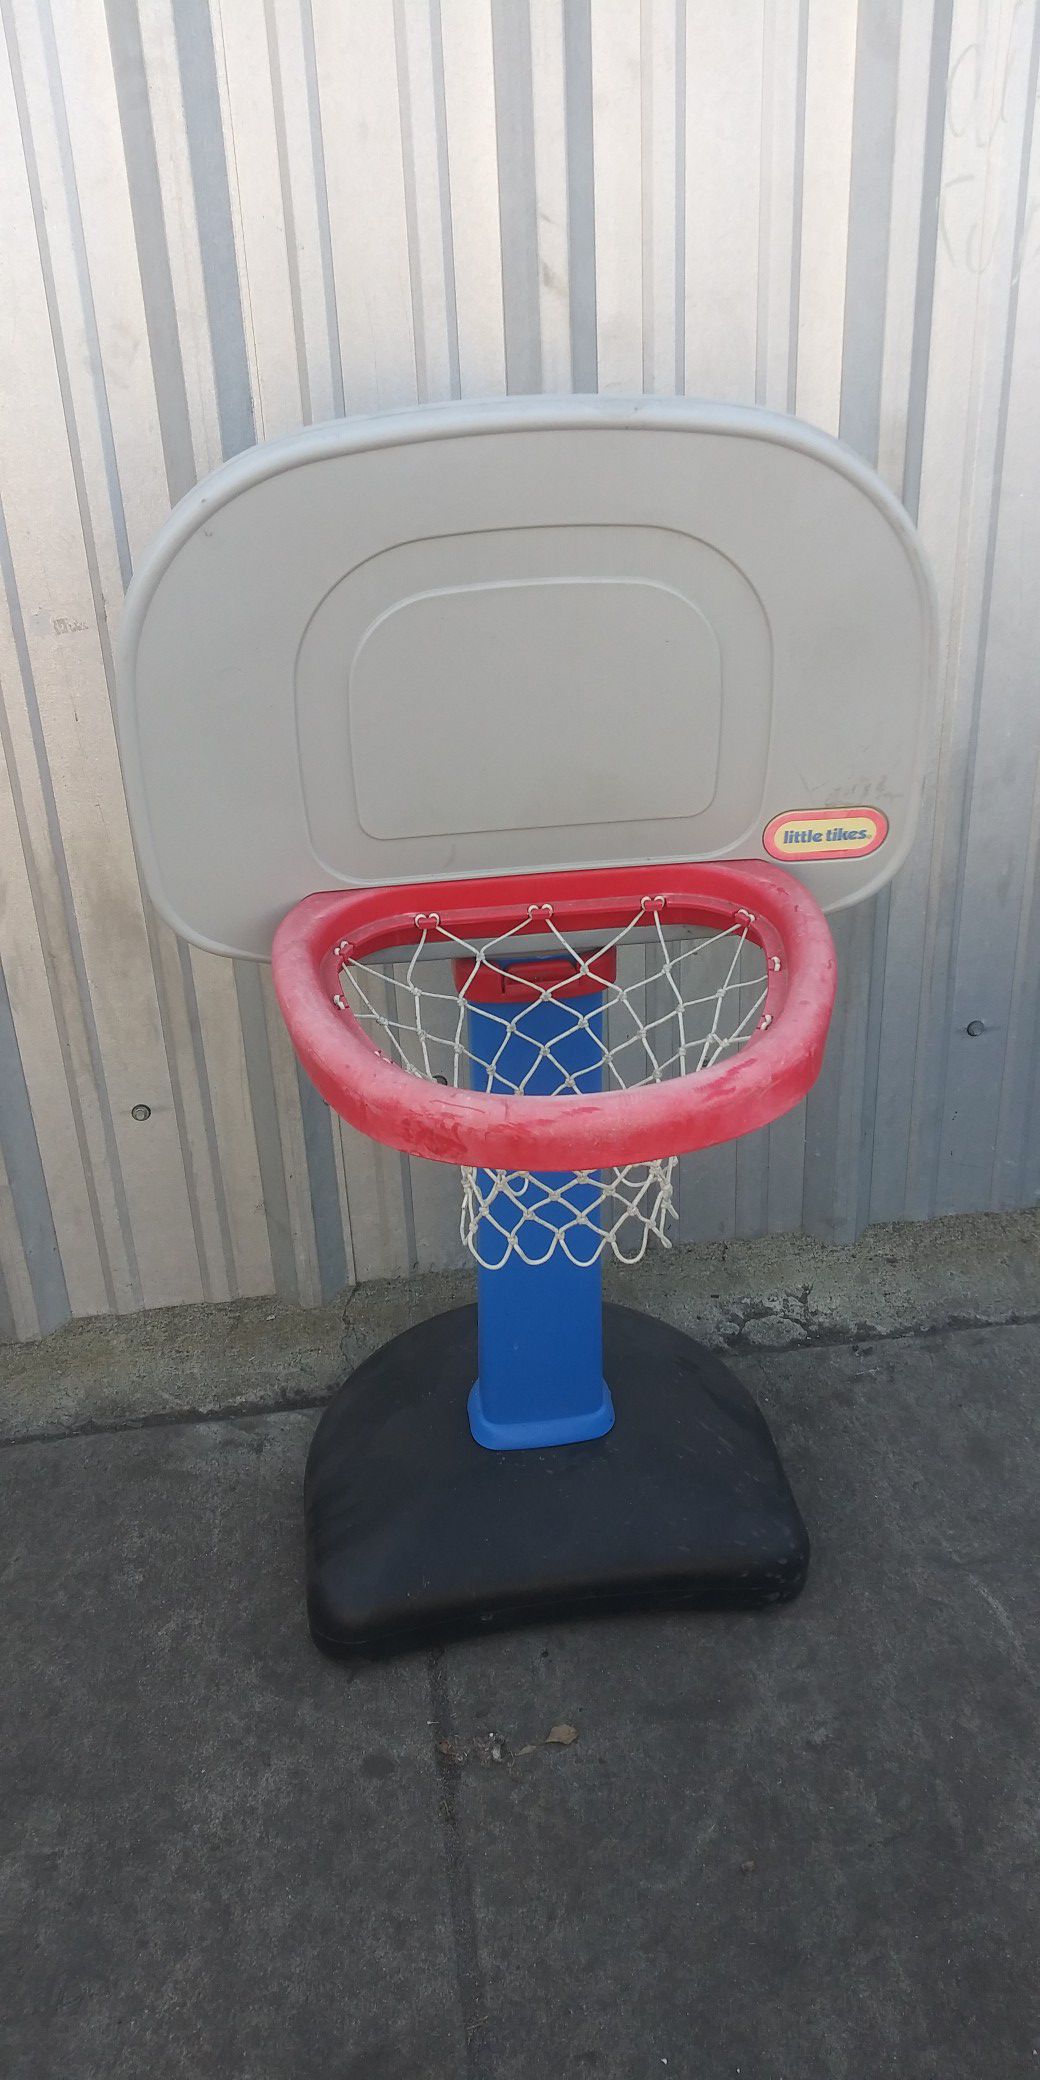 Kids basketball court toys